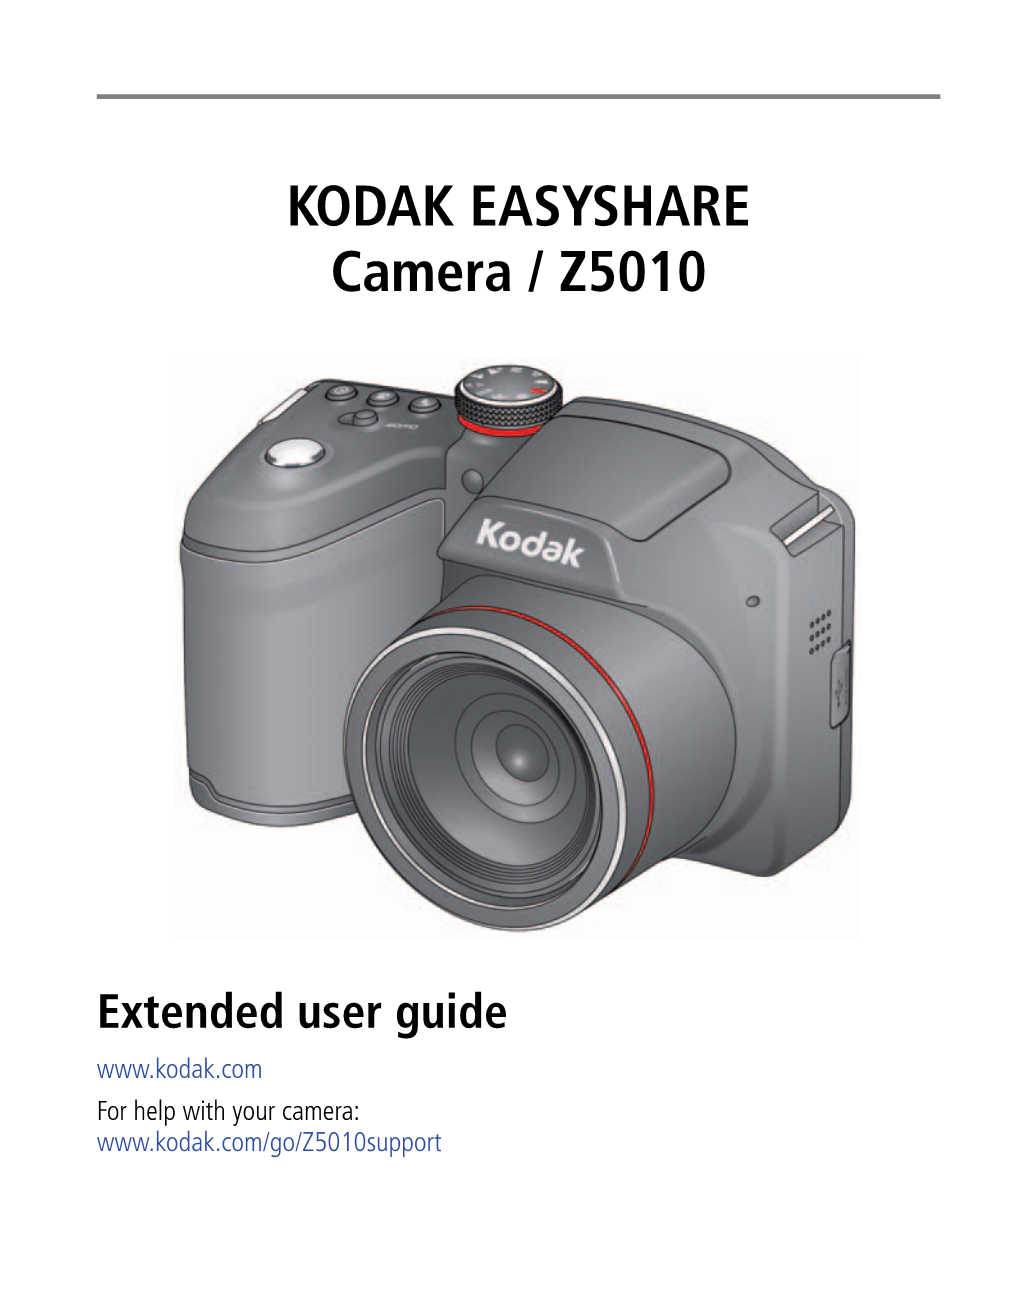 KODAK EASYSHARE Camera / Z5010